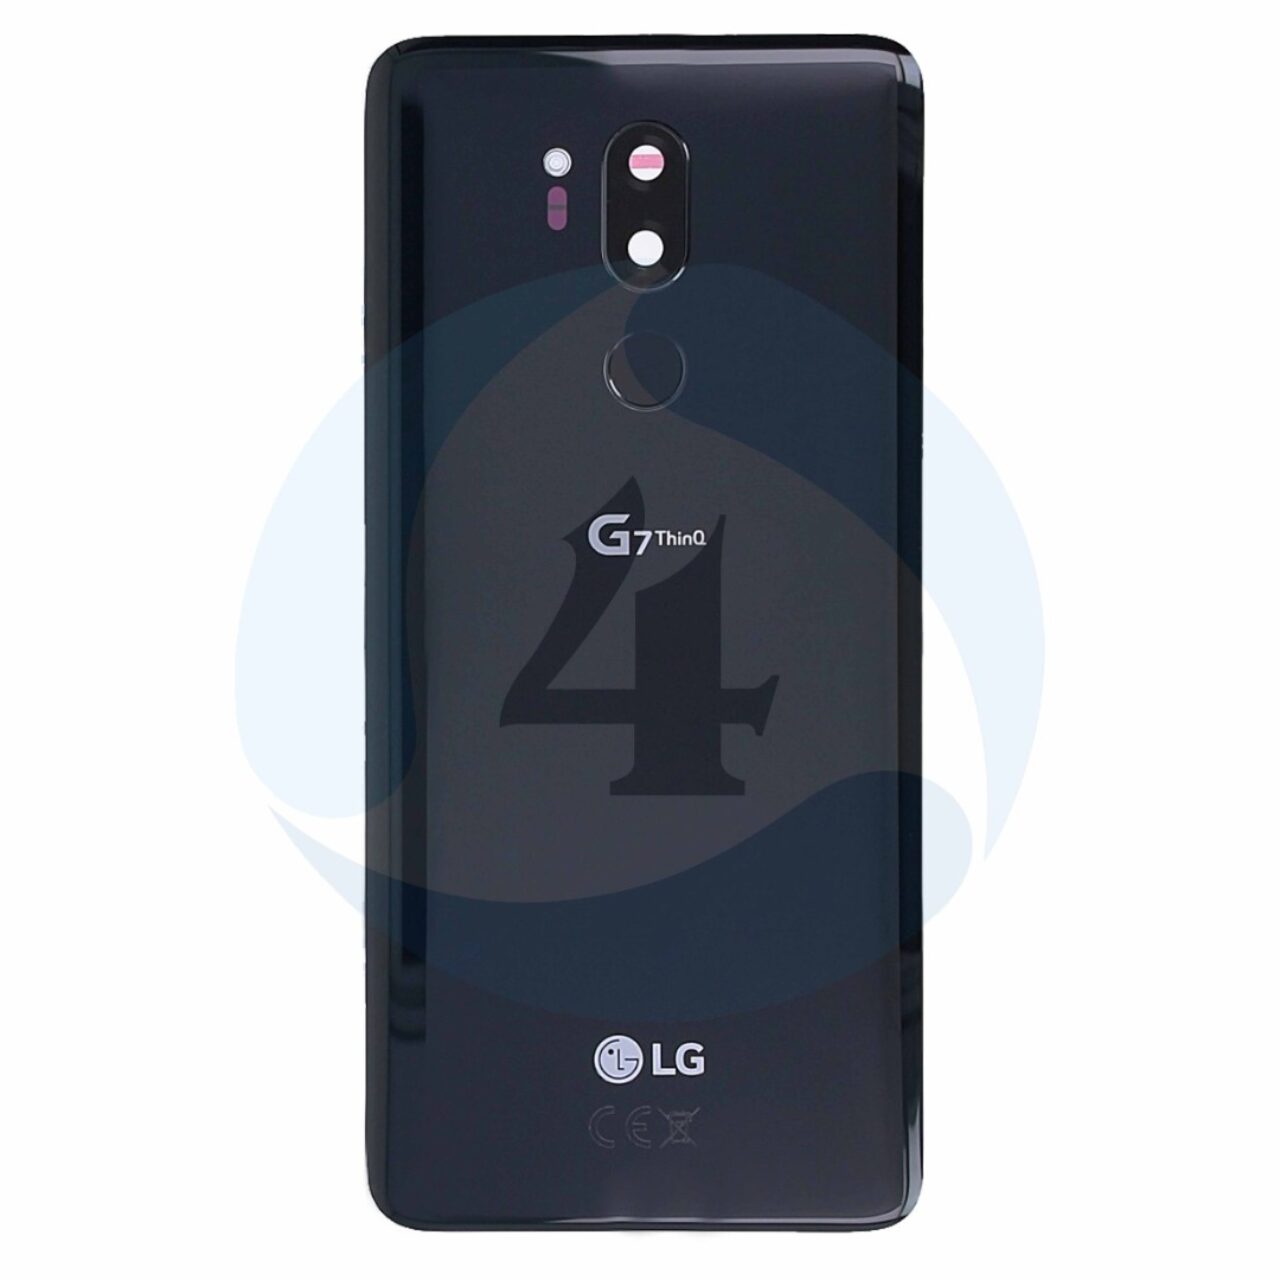 Backcover Black For LG G7 Thin Q G710 EM